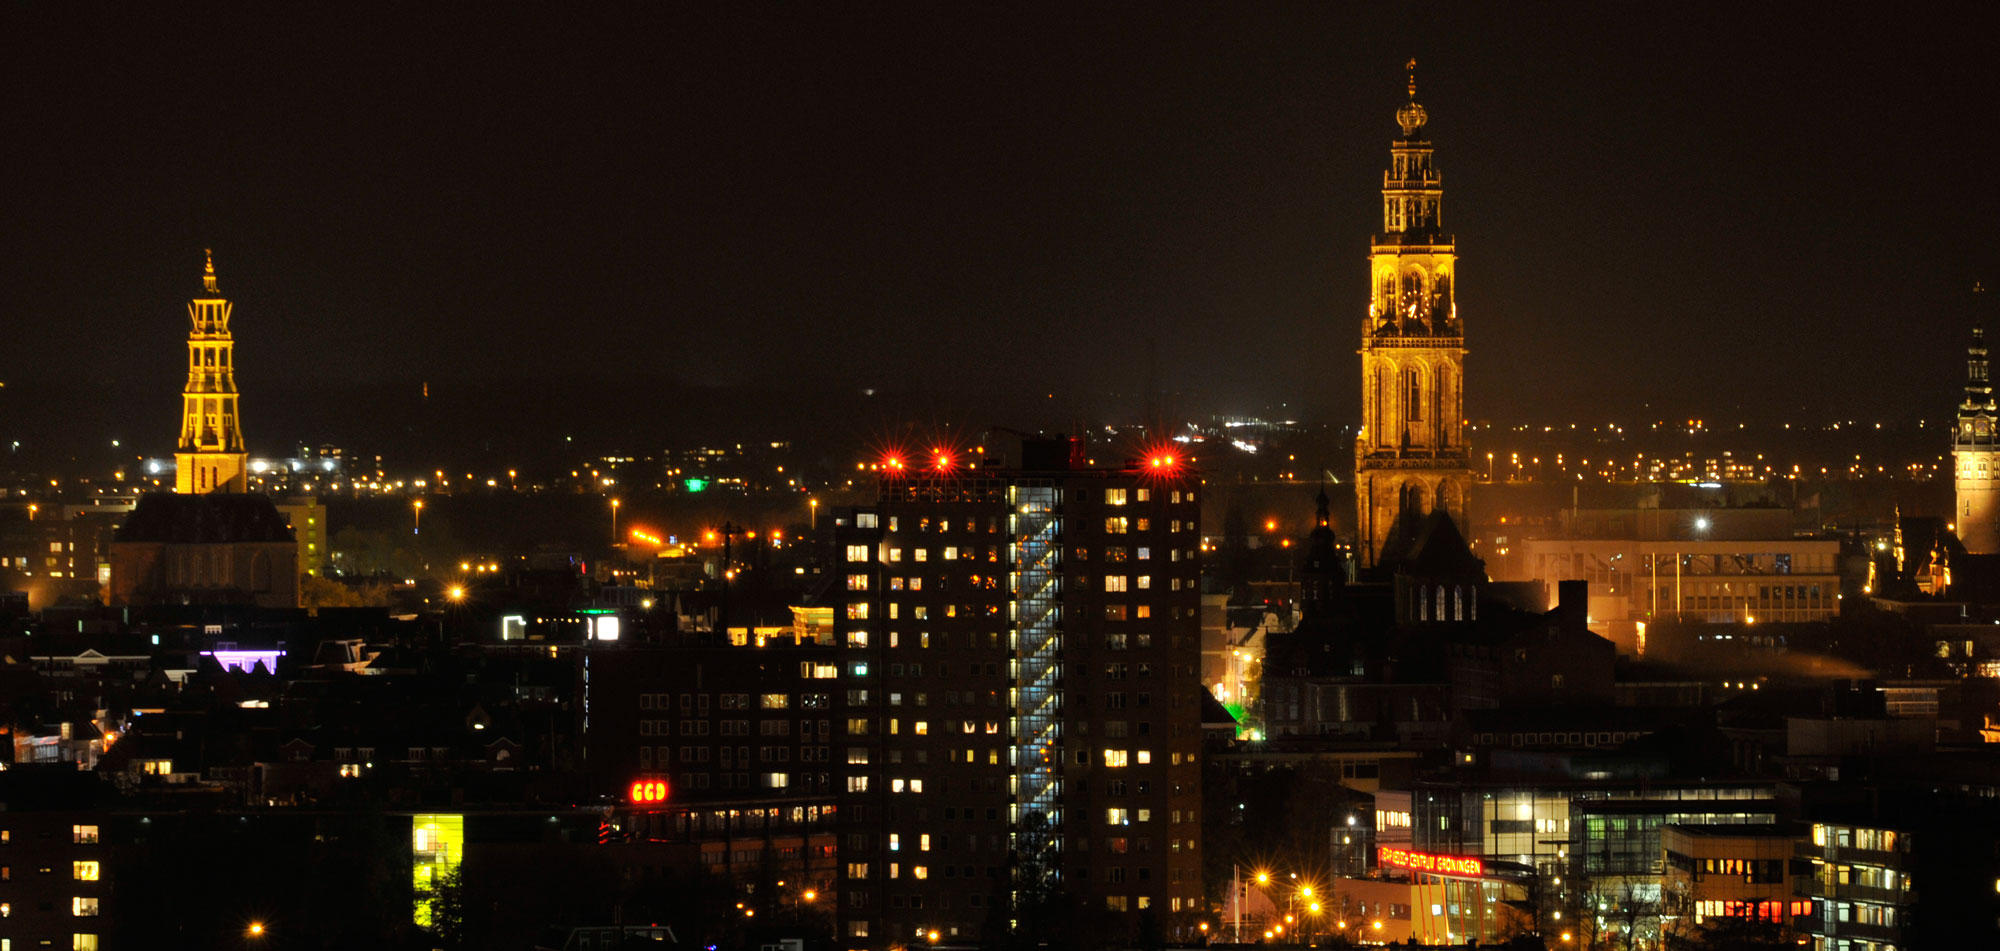 The city of Groningen